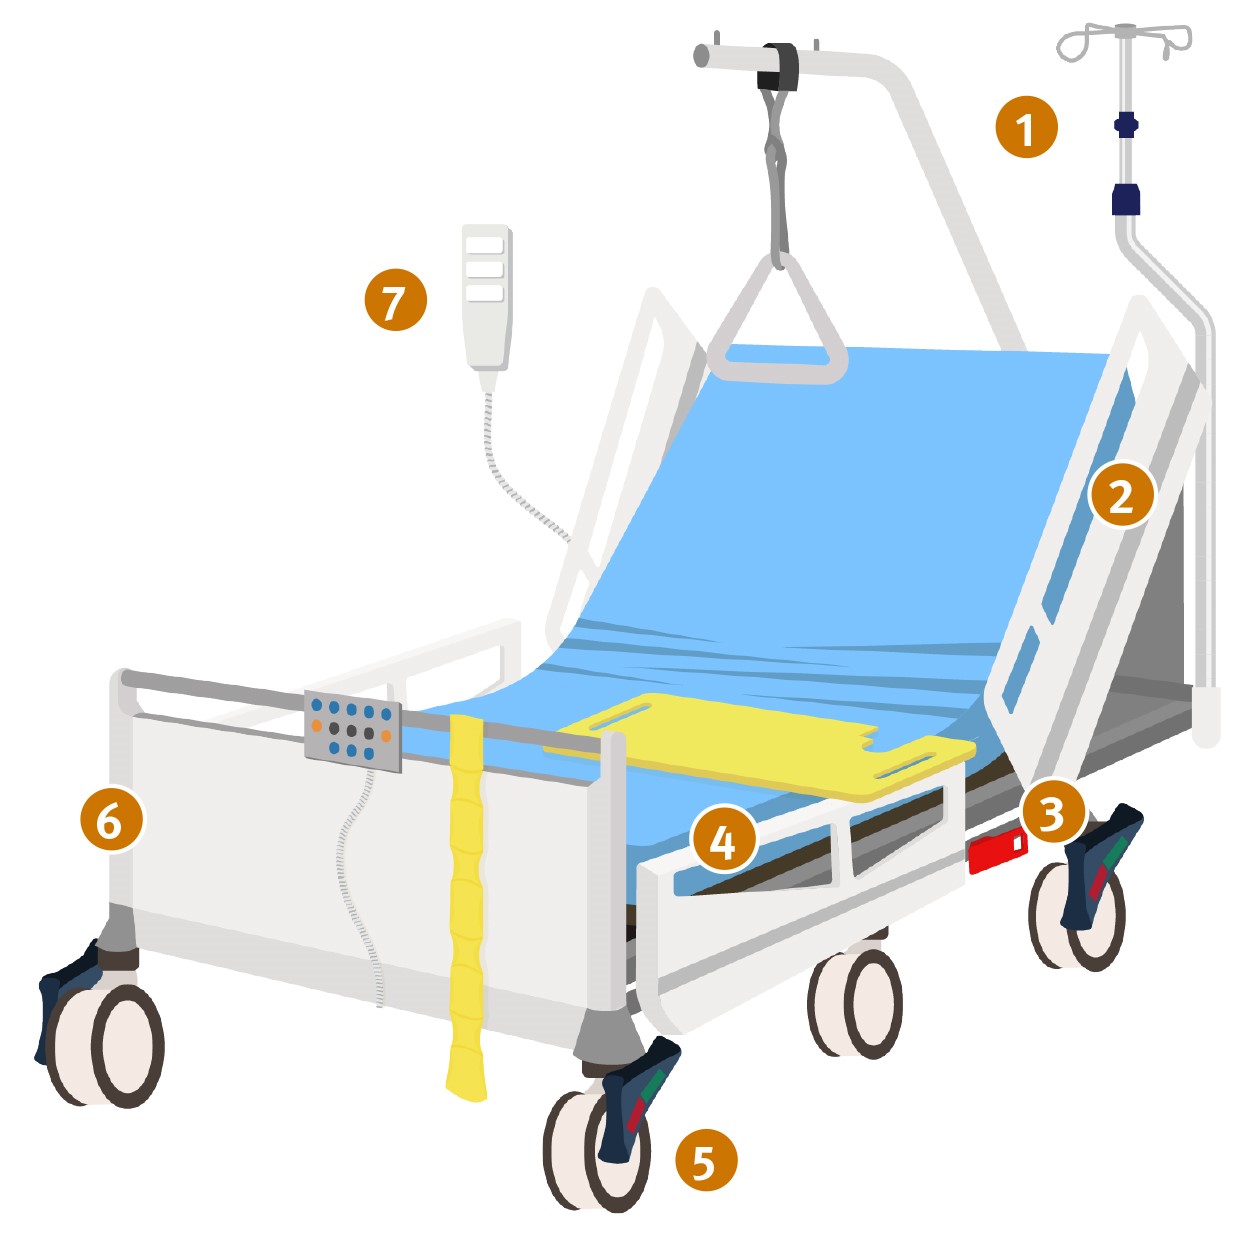 Grafik: Krankenhausbett, an dem alle wichtigen Elemente nummeriert sind